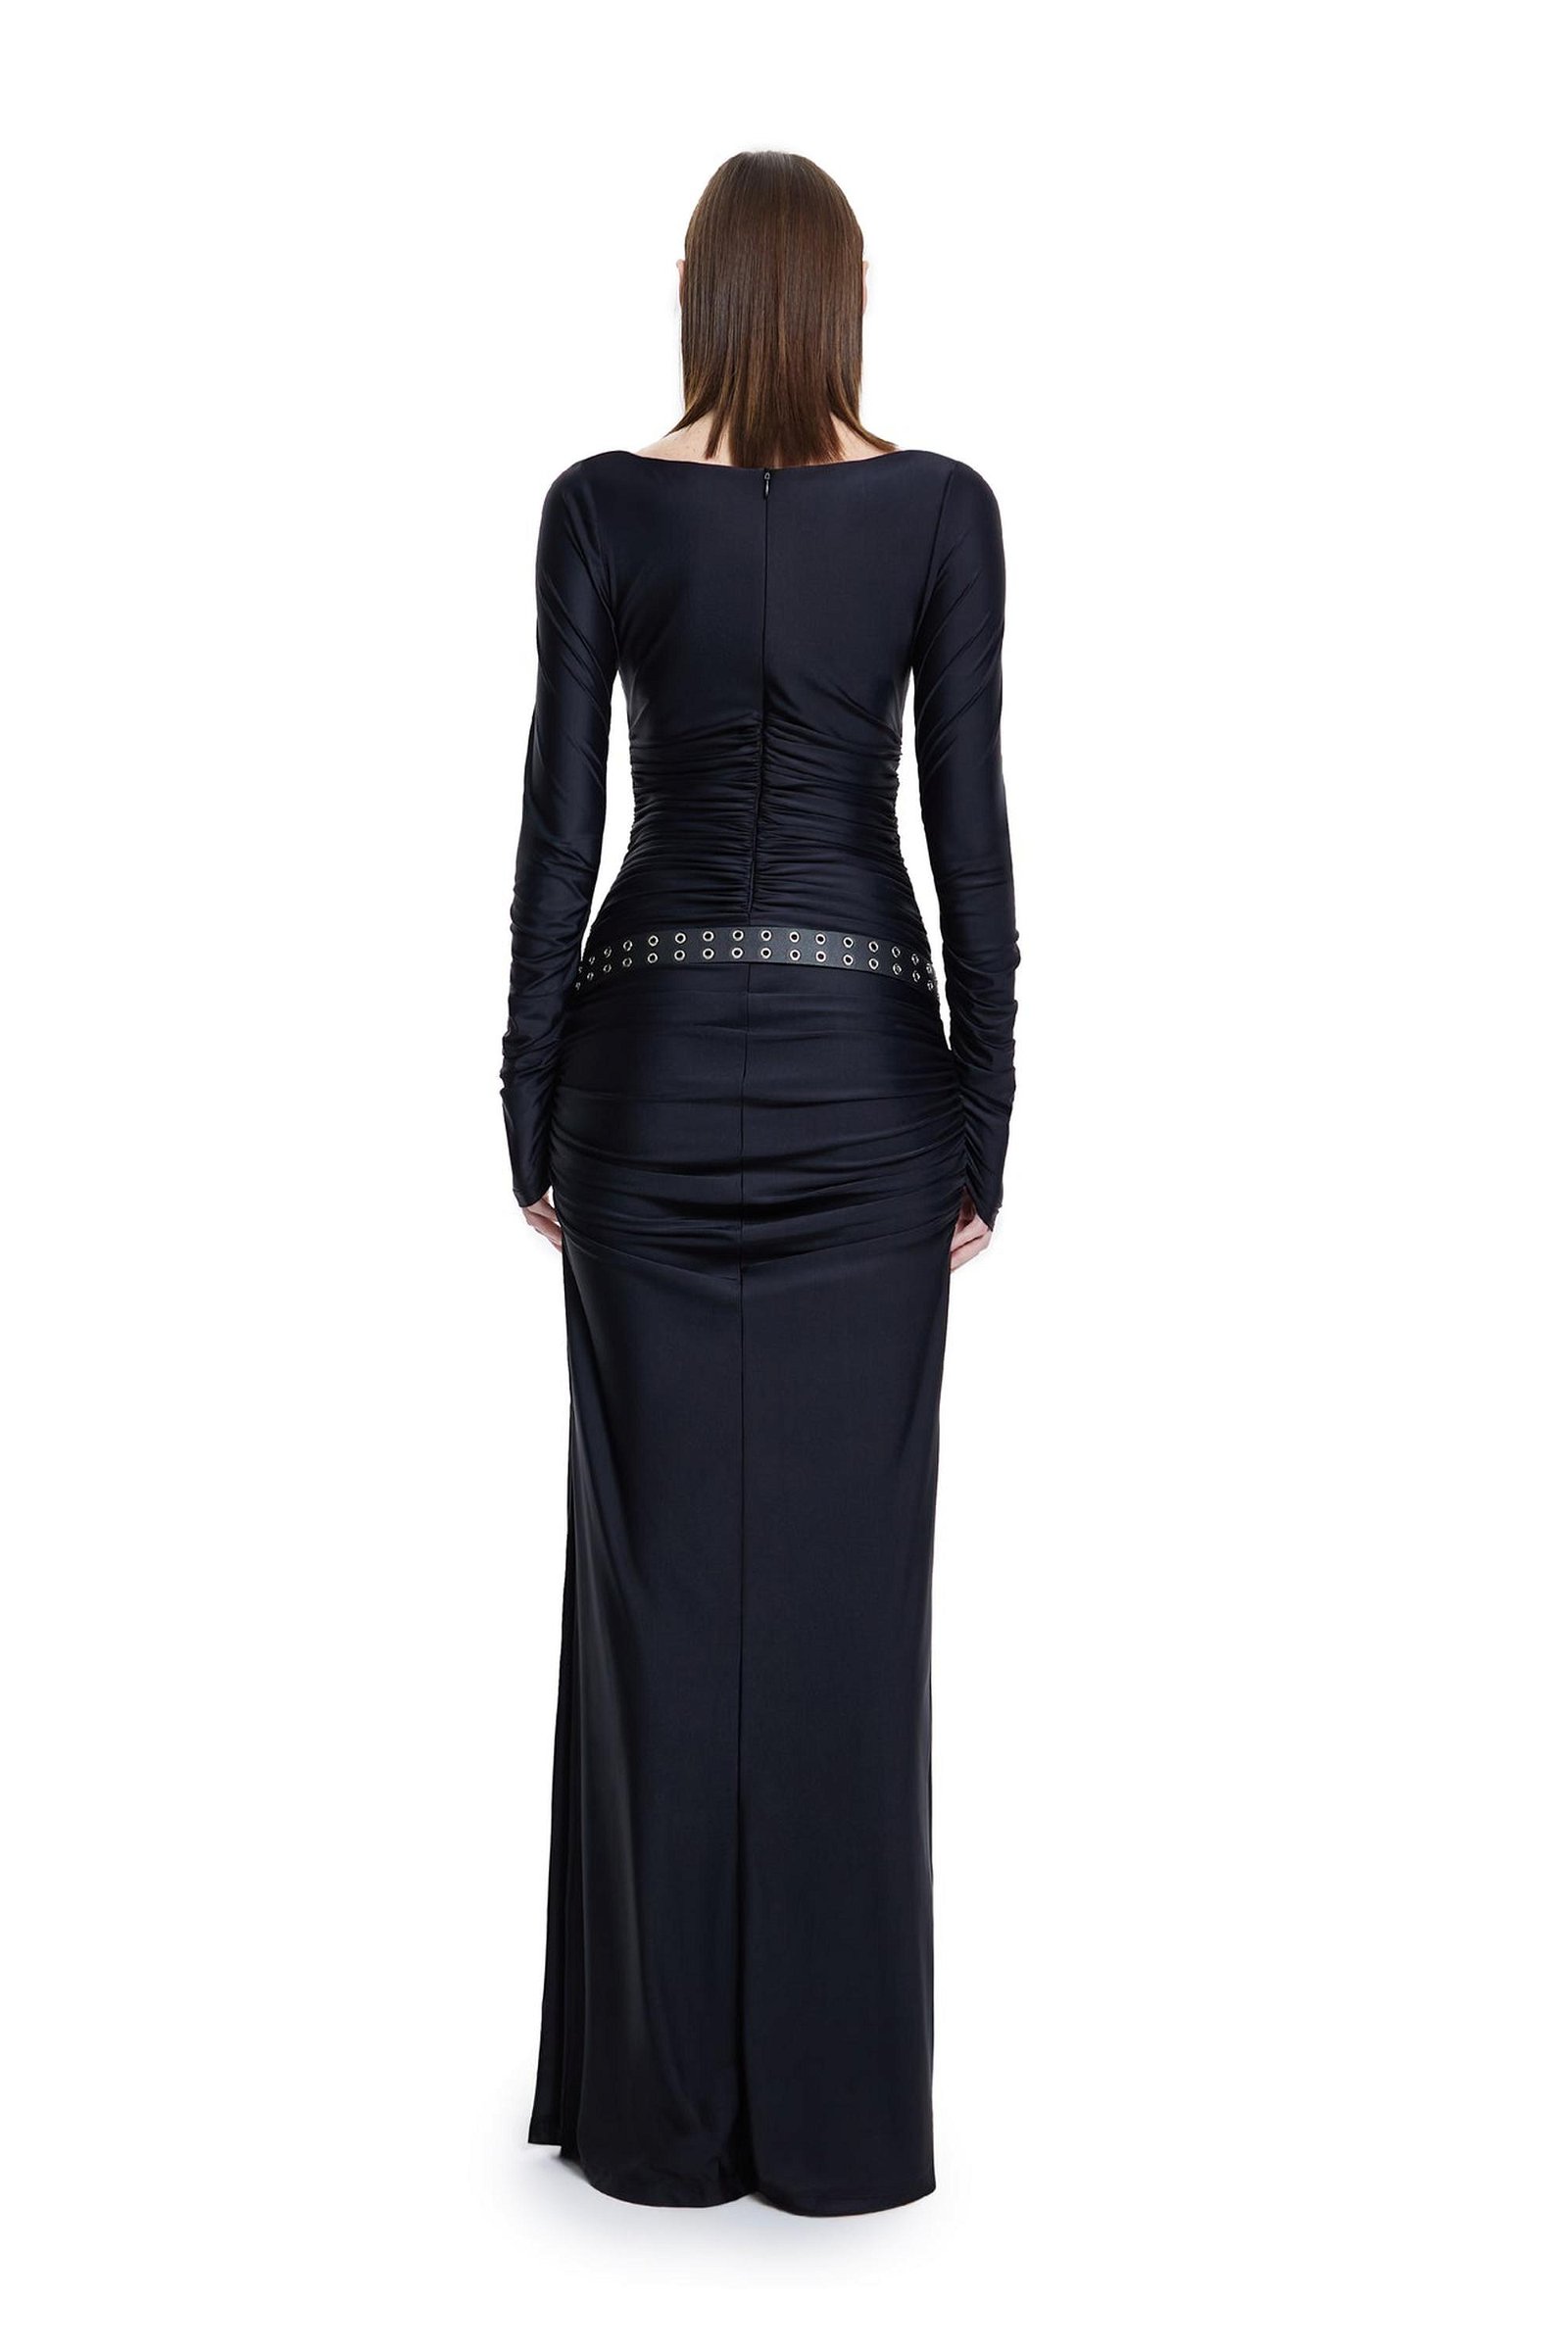 Khela The Label Kadın Sentient Elbise Siyah